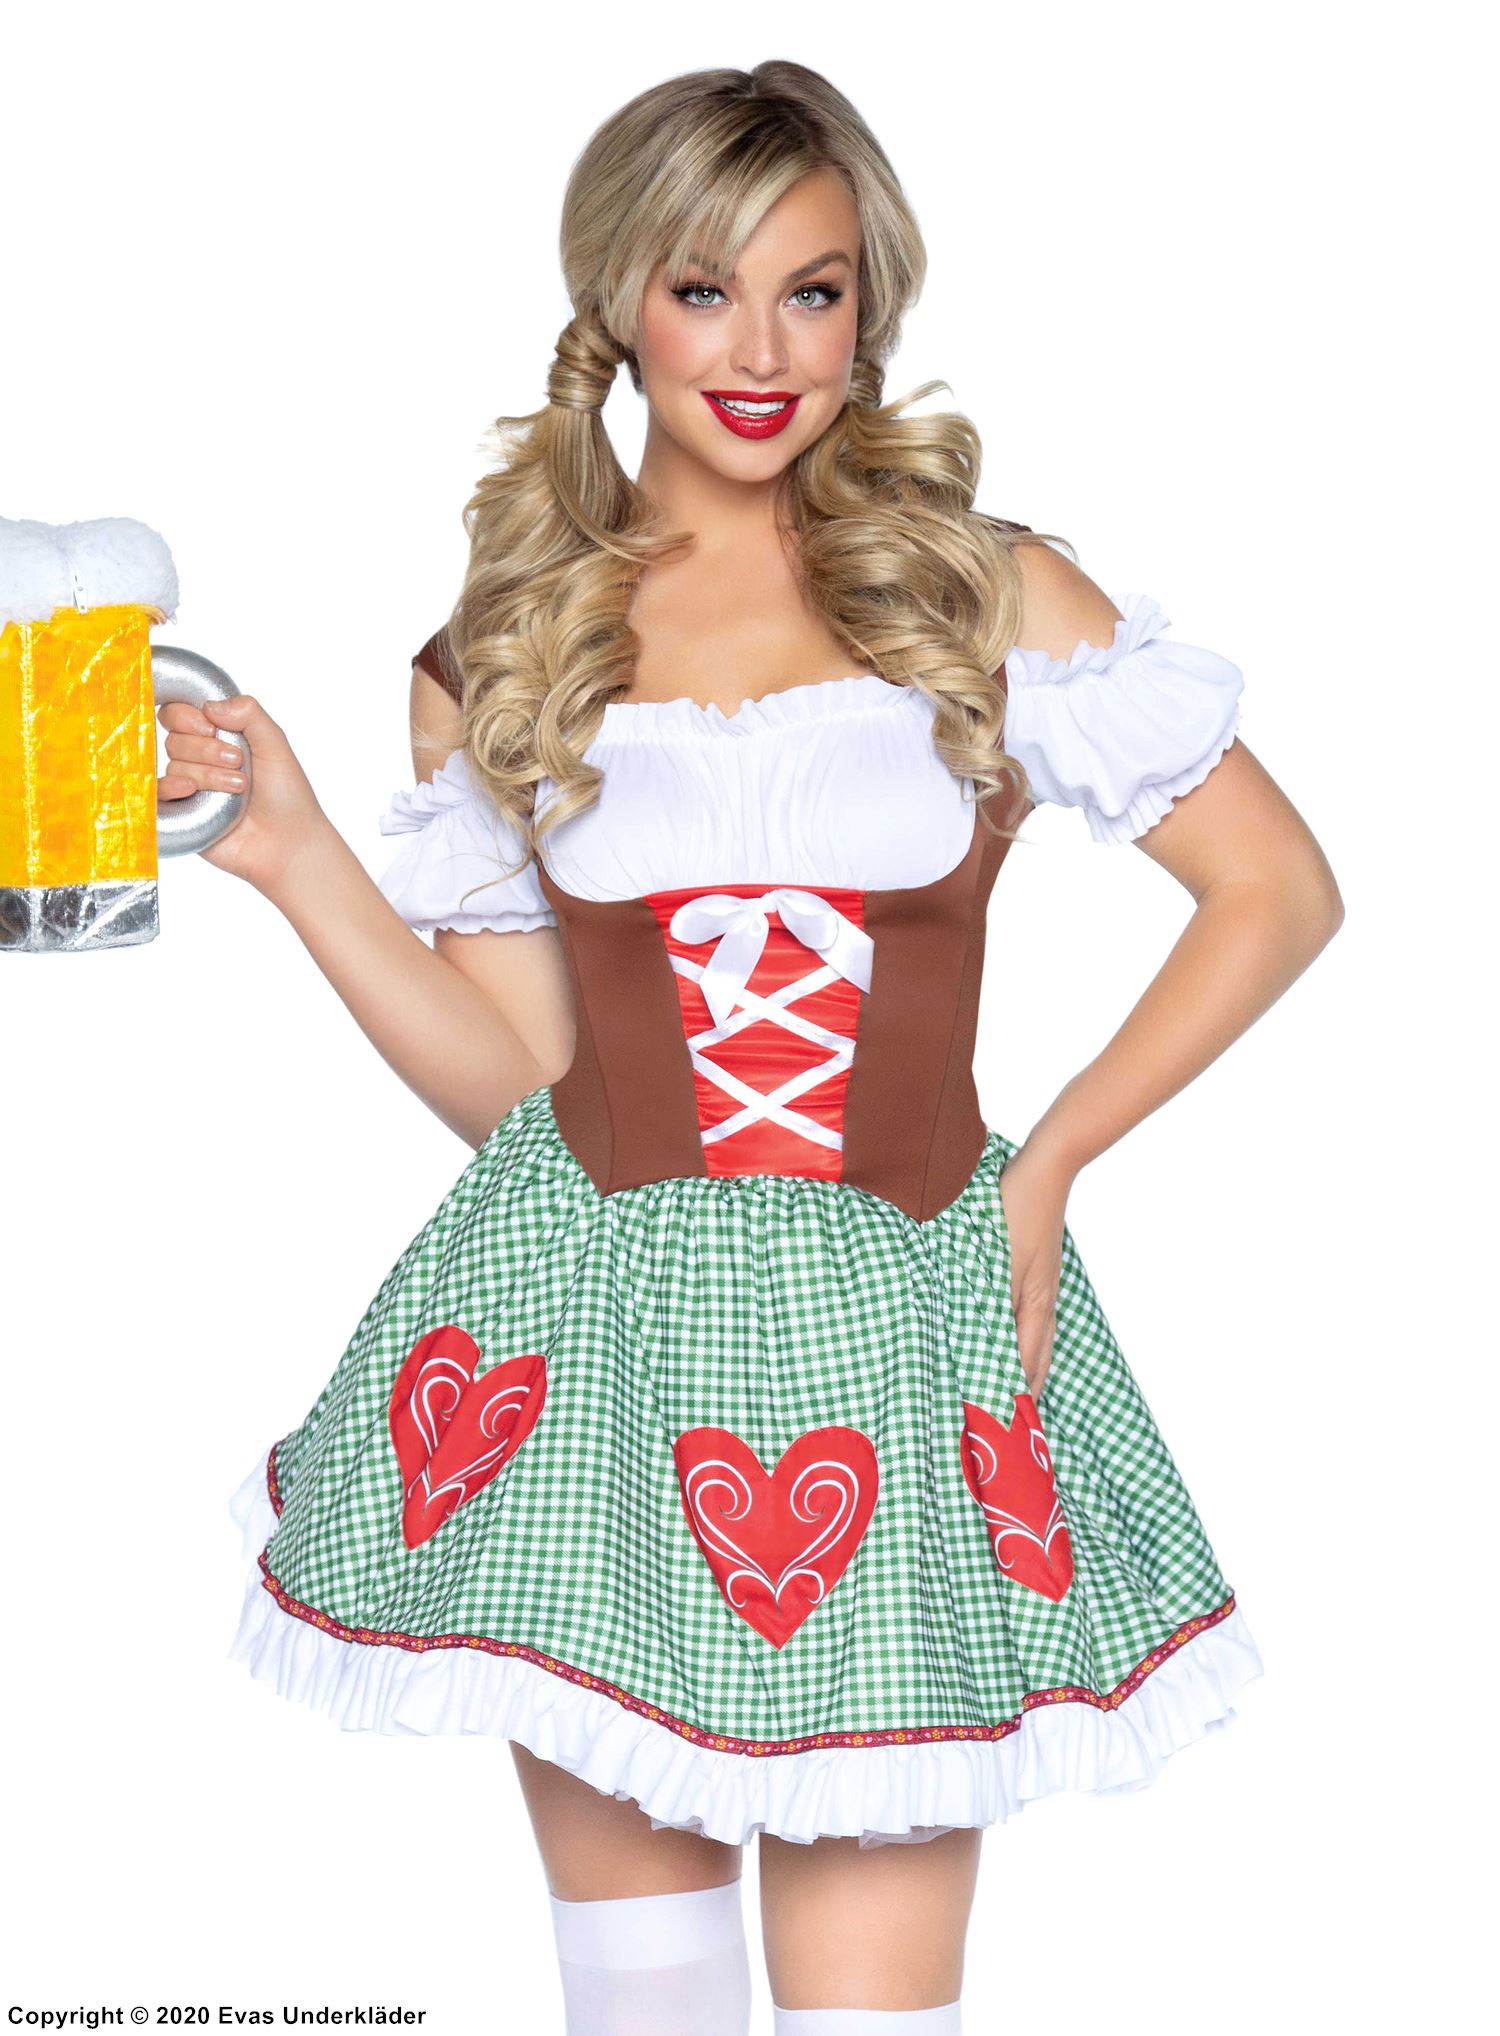 Details about   3 Pcs German Dirndl Women Dress Waitress Oktoberfest Long Red Party EMBROIDERED 